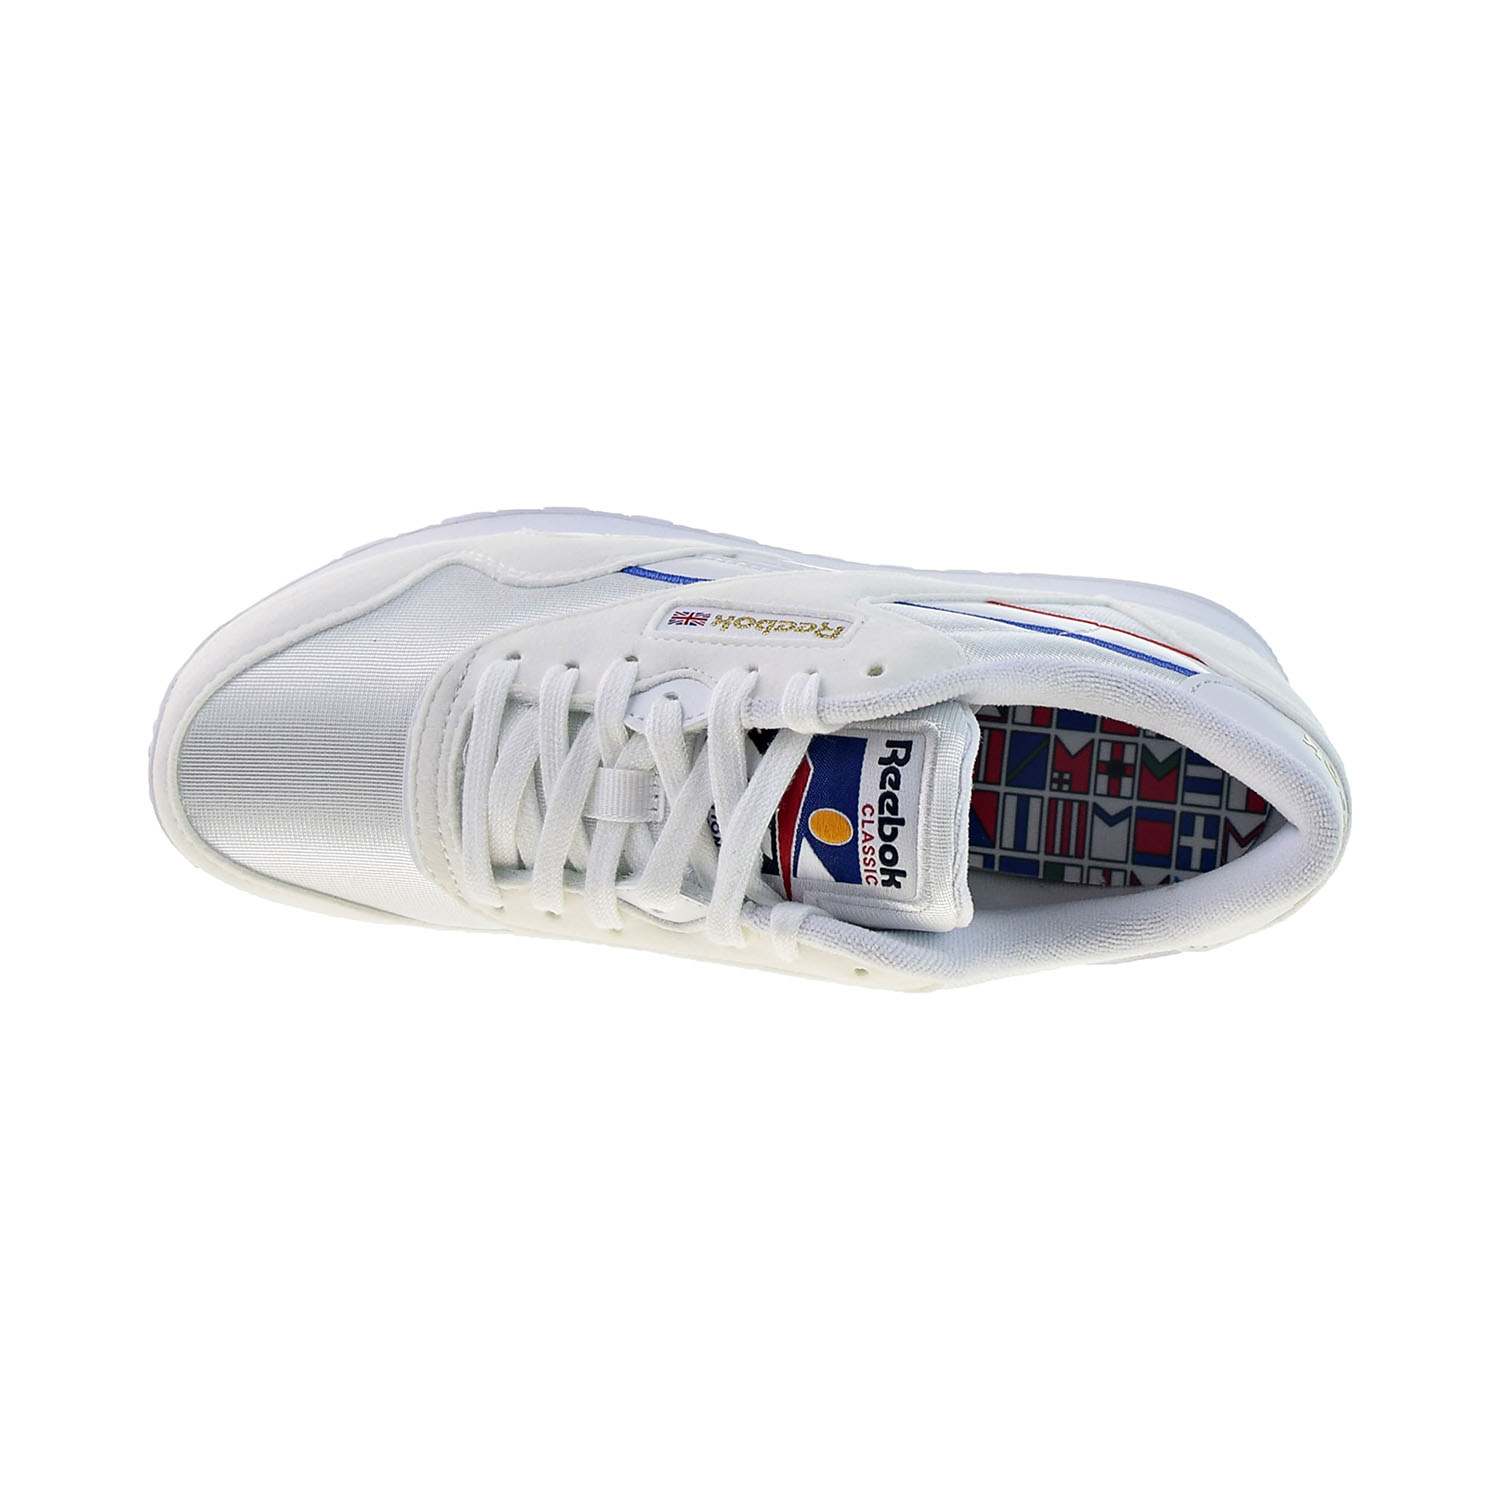 Adidas Reebok Classic Nylon Women's Shoes White-Radiant Red-Blue Blast eg5909